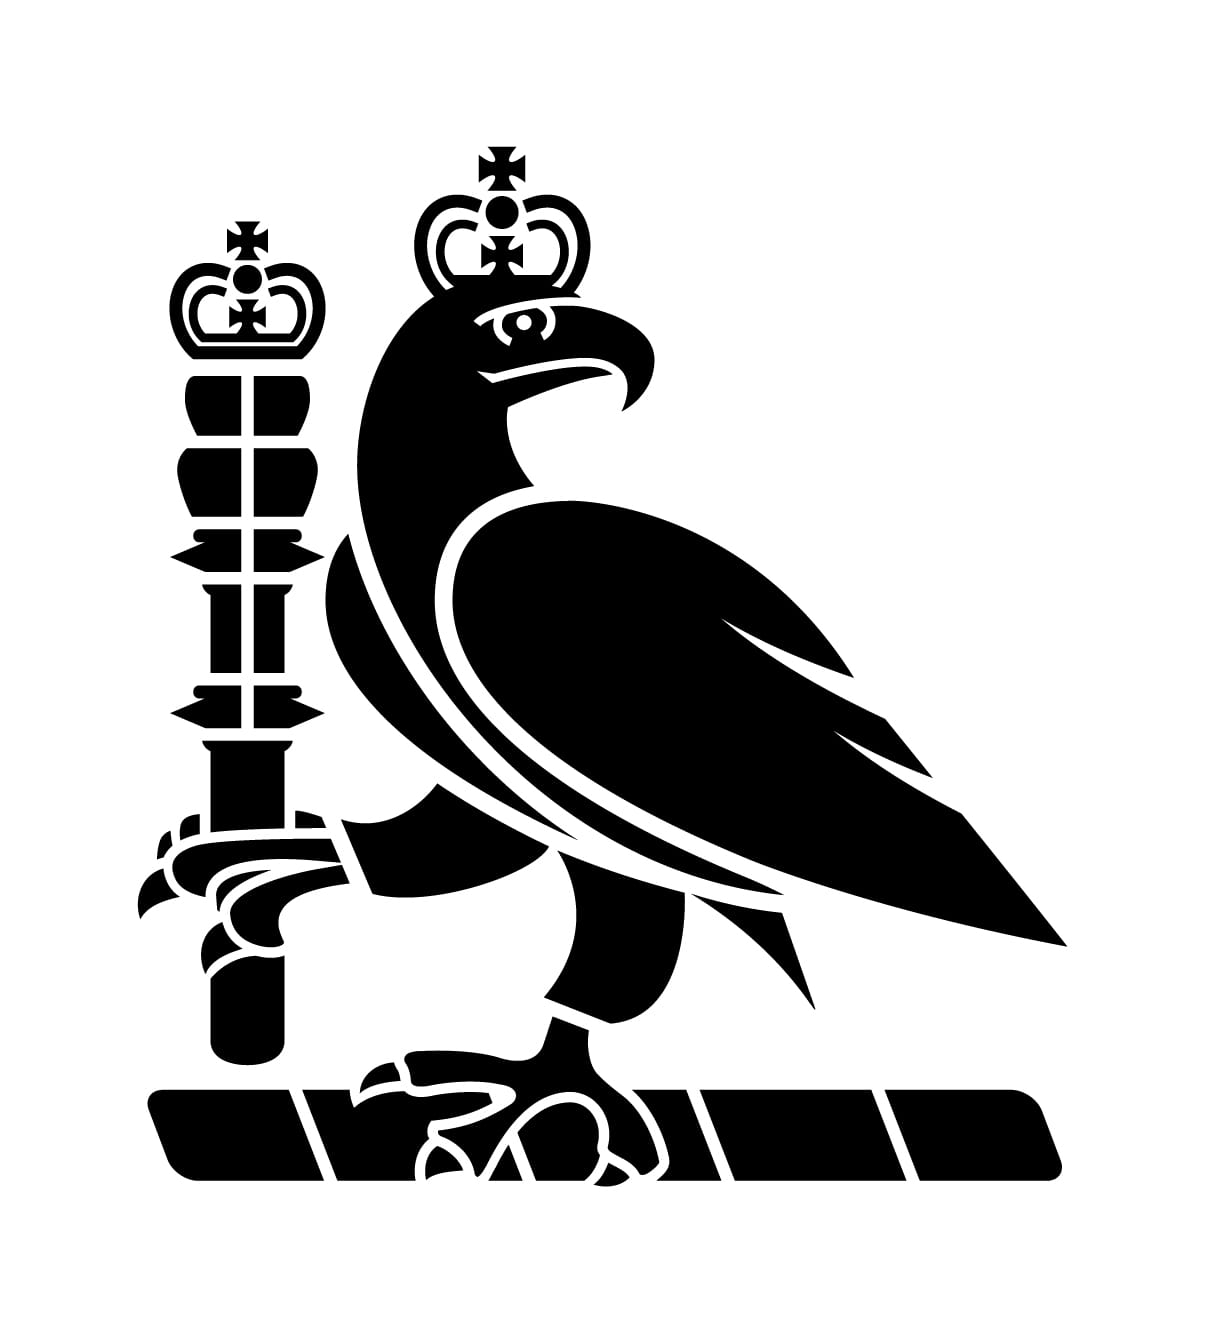 RCS England logo